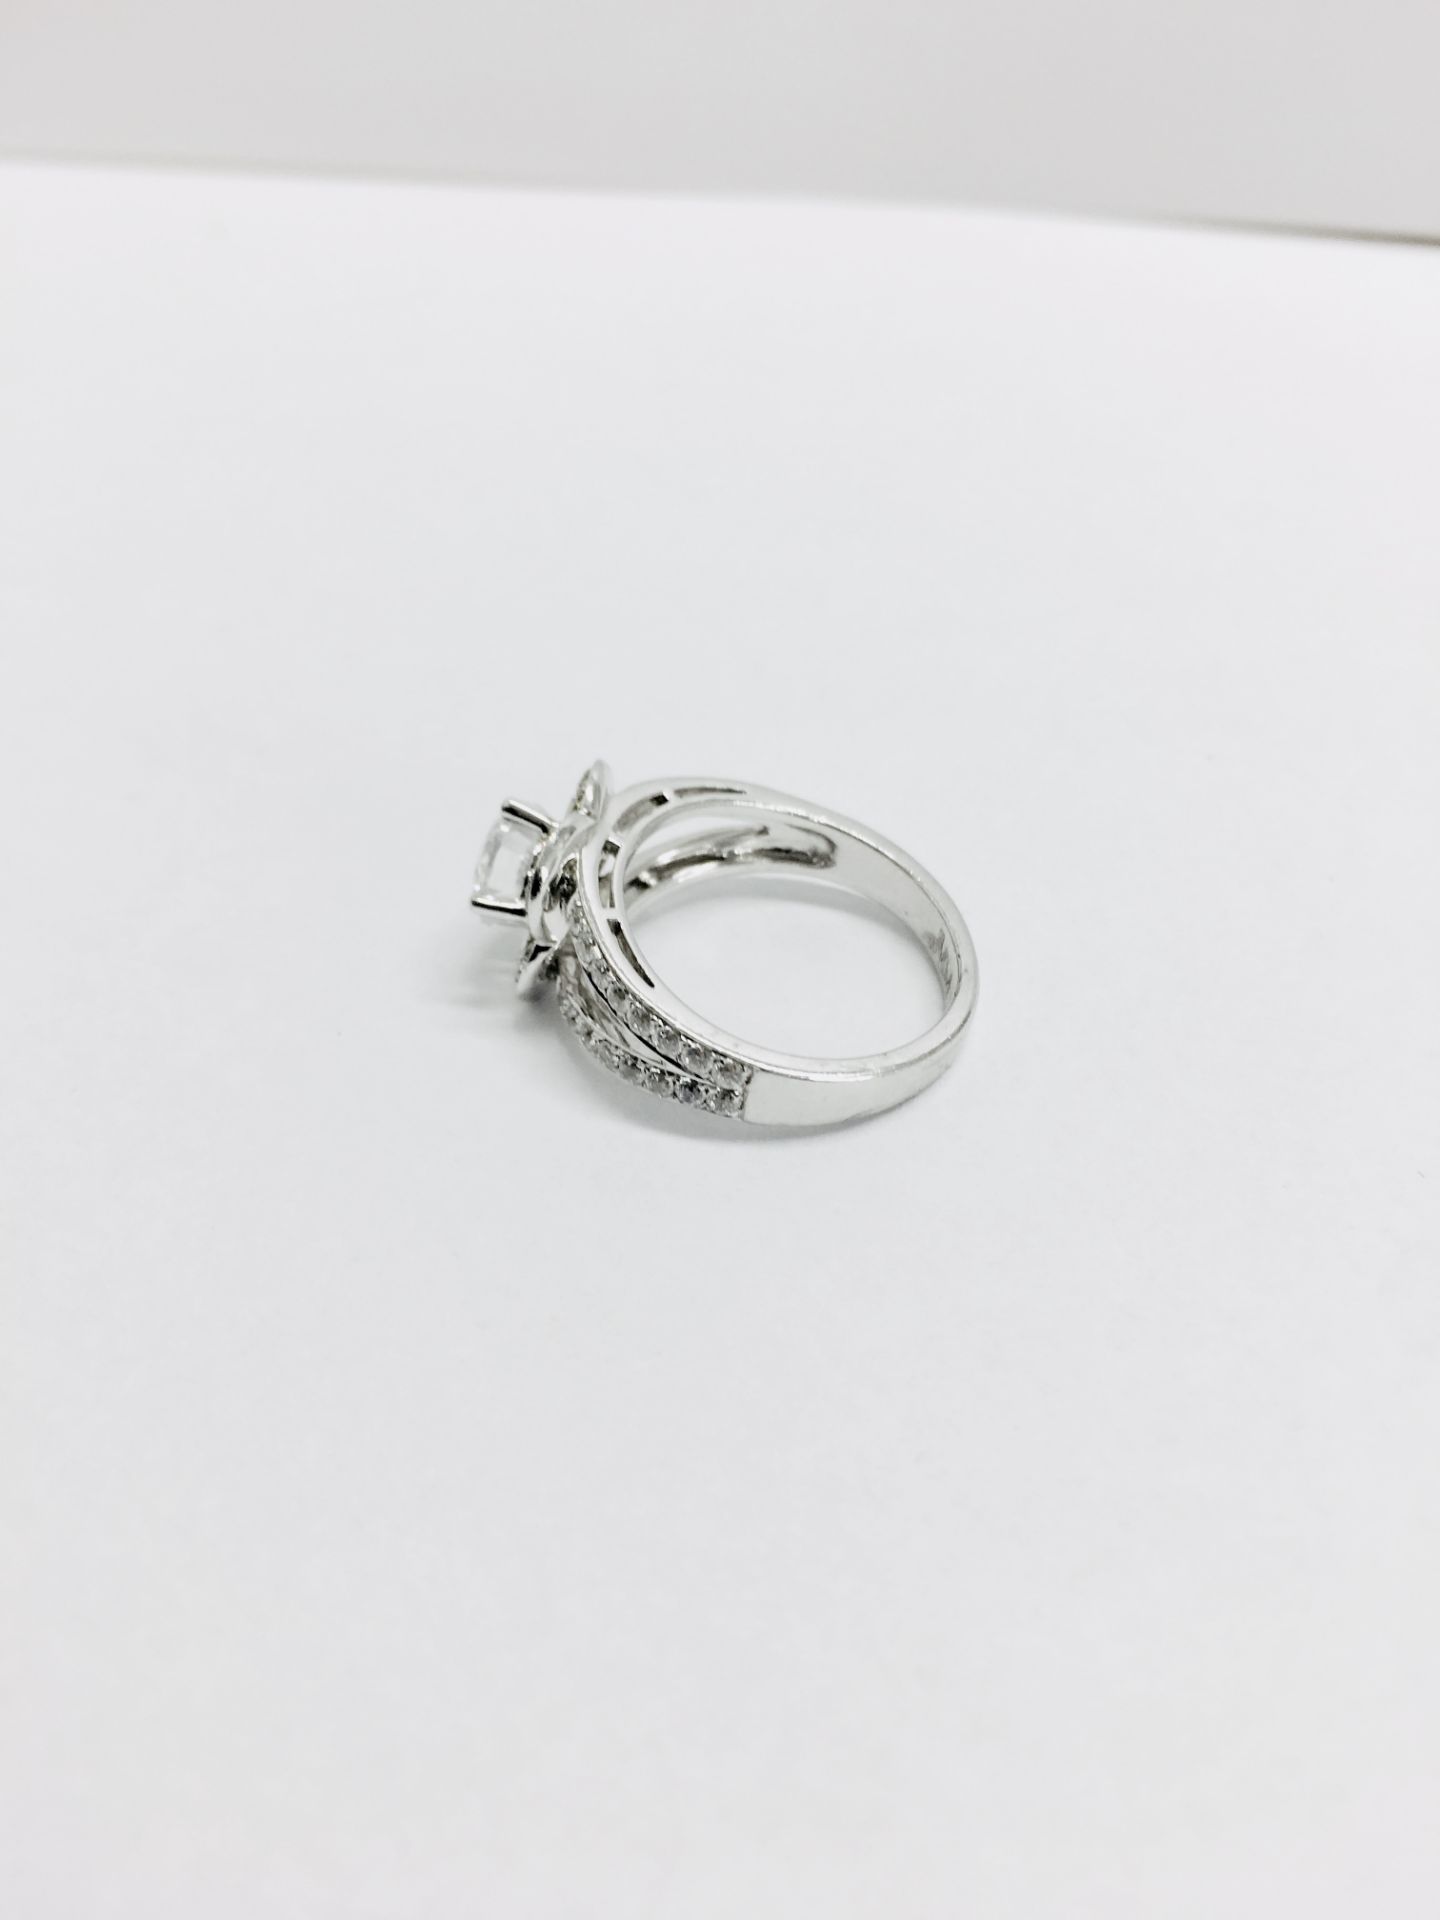 1.04ct diamond set soliatire ring in platinum. H colour and I1 clarity. Halo setting small